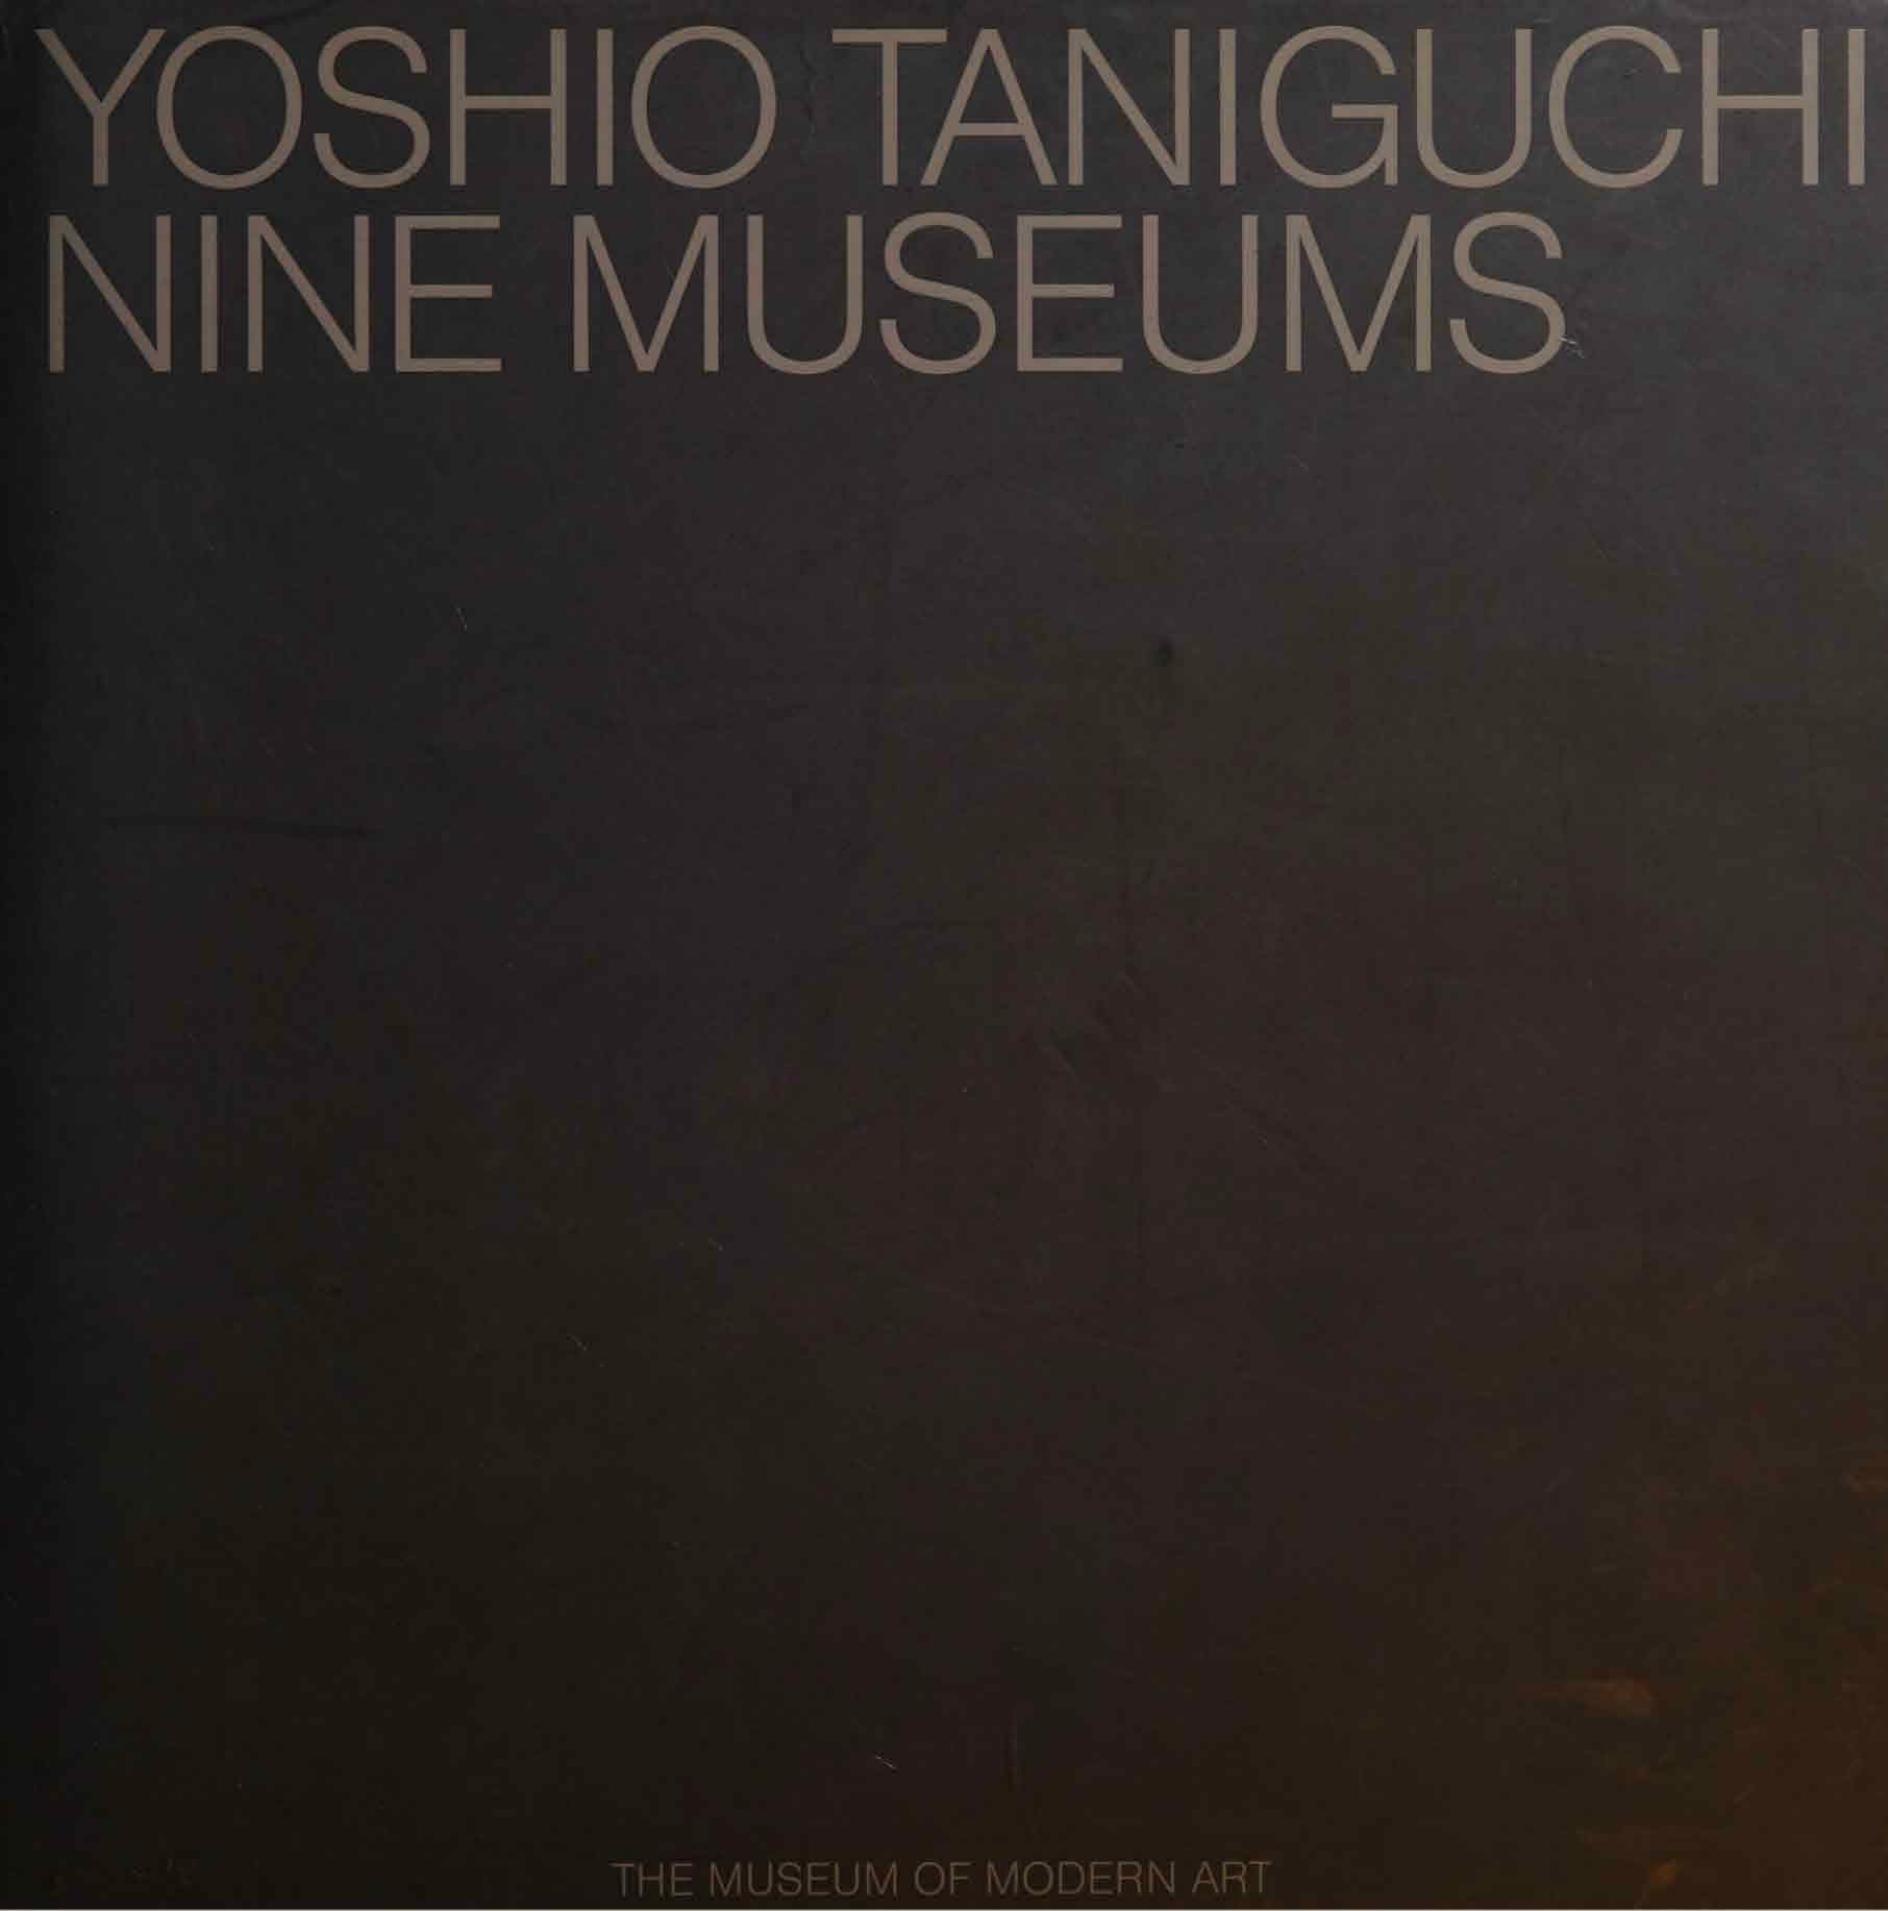 Yoshio Taniguchi: Nine Museums by Terence Riley